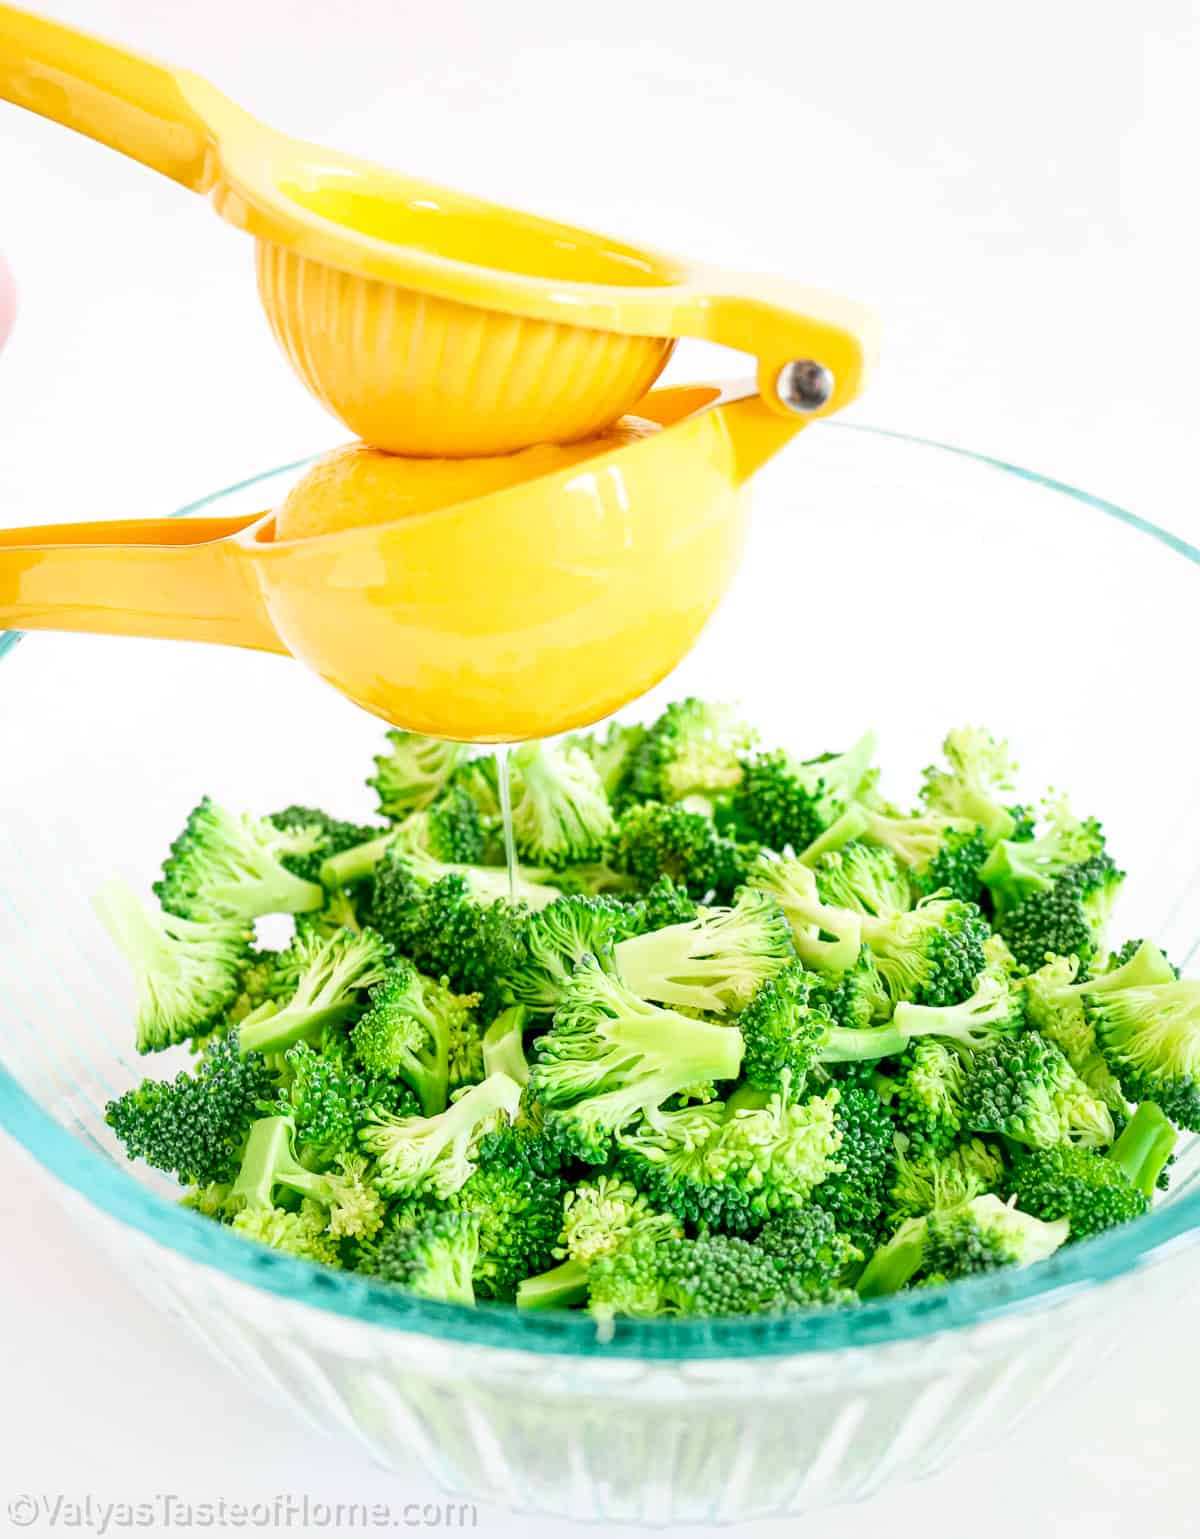 Cut the broccoli, squeeze some fresh lemon juice over it. 